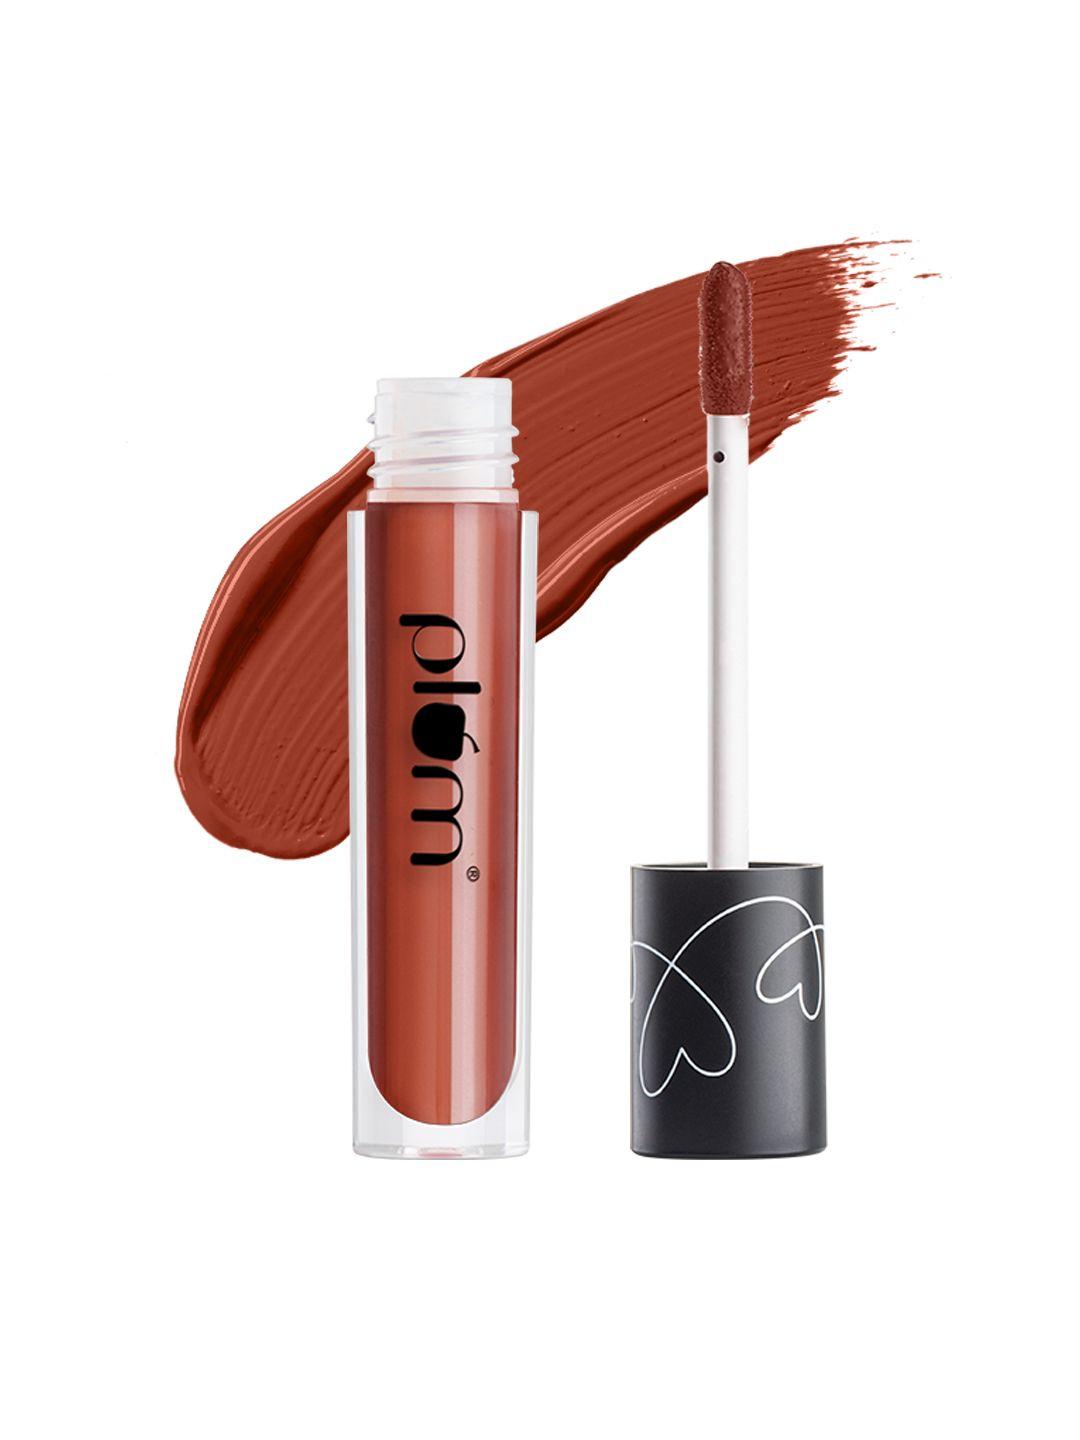 plum non-drying matte in heaven liquid lipstick 4.5ml - toast wanted 133